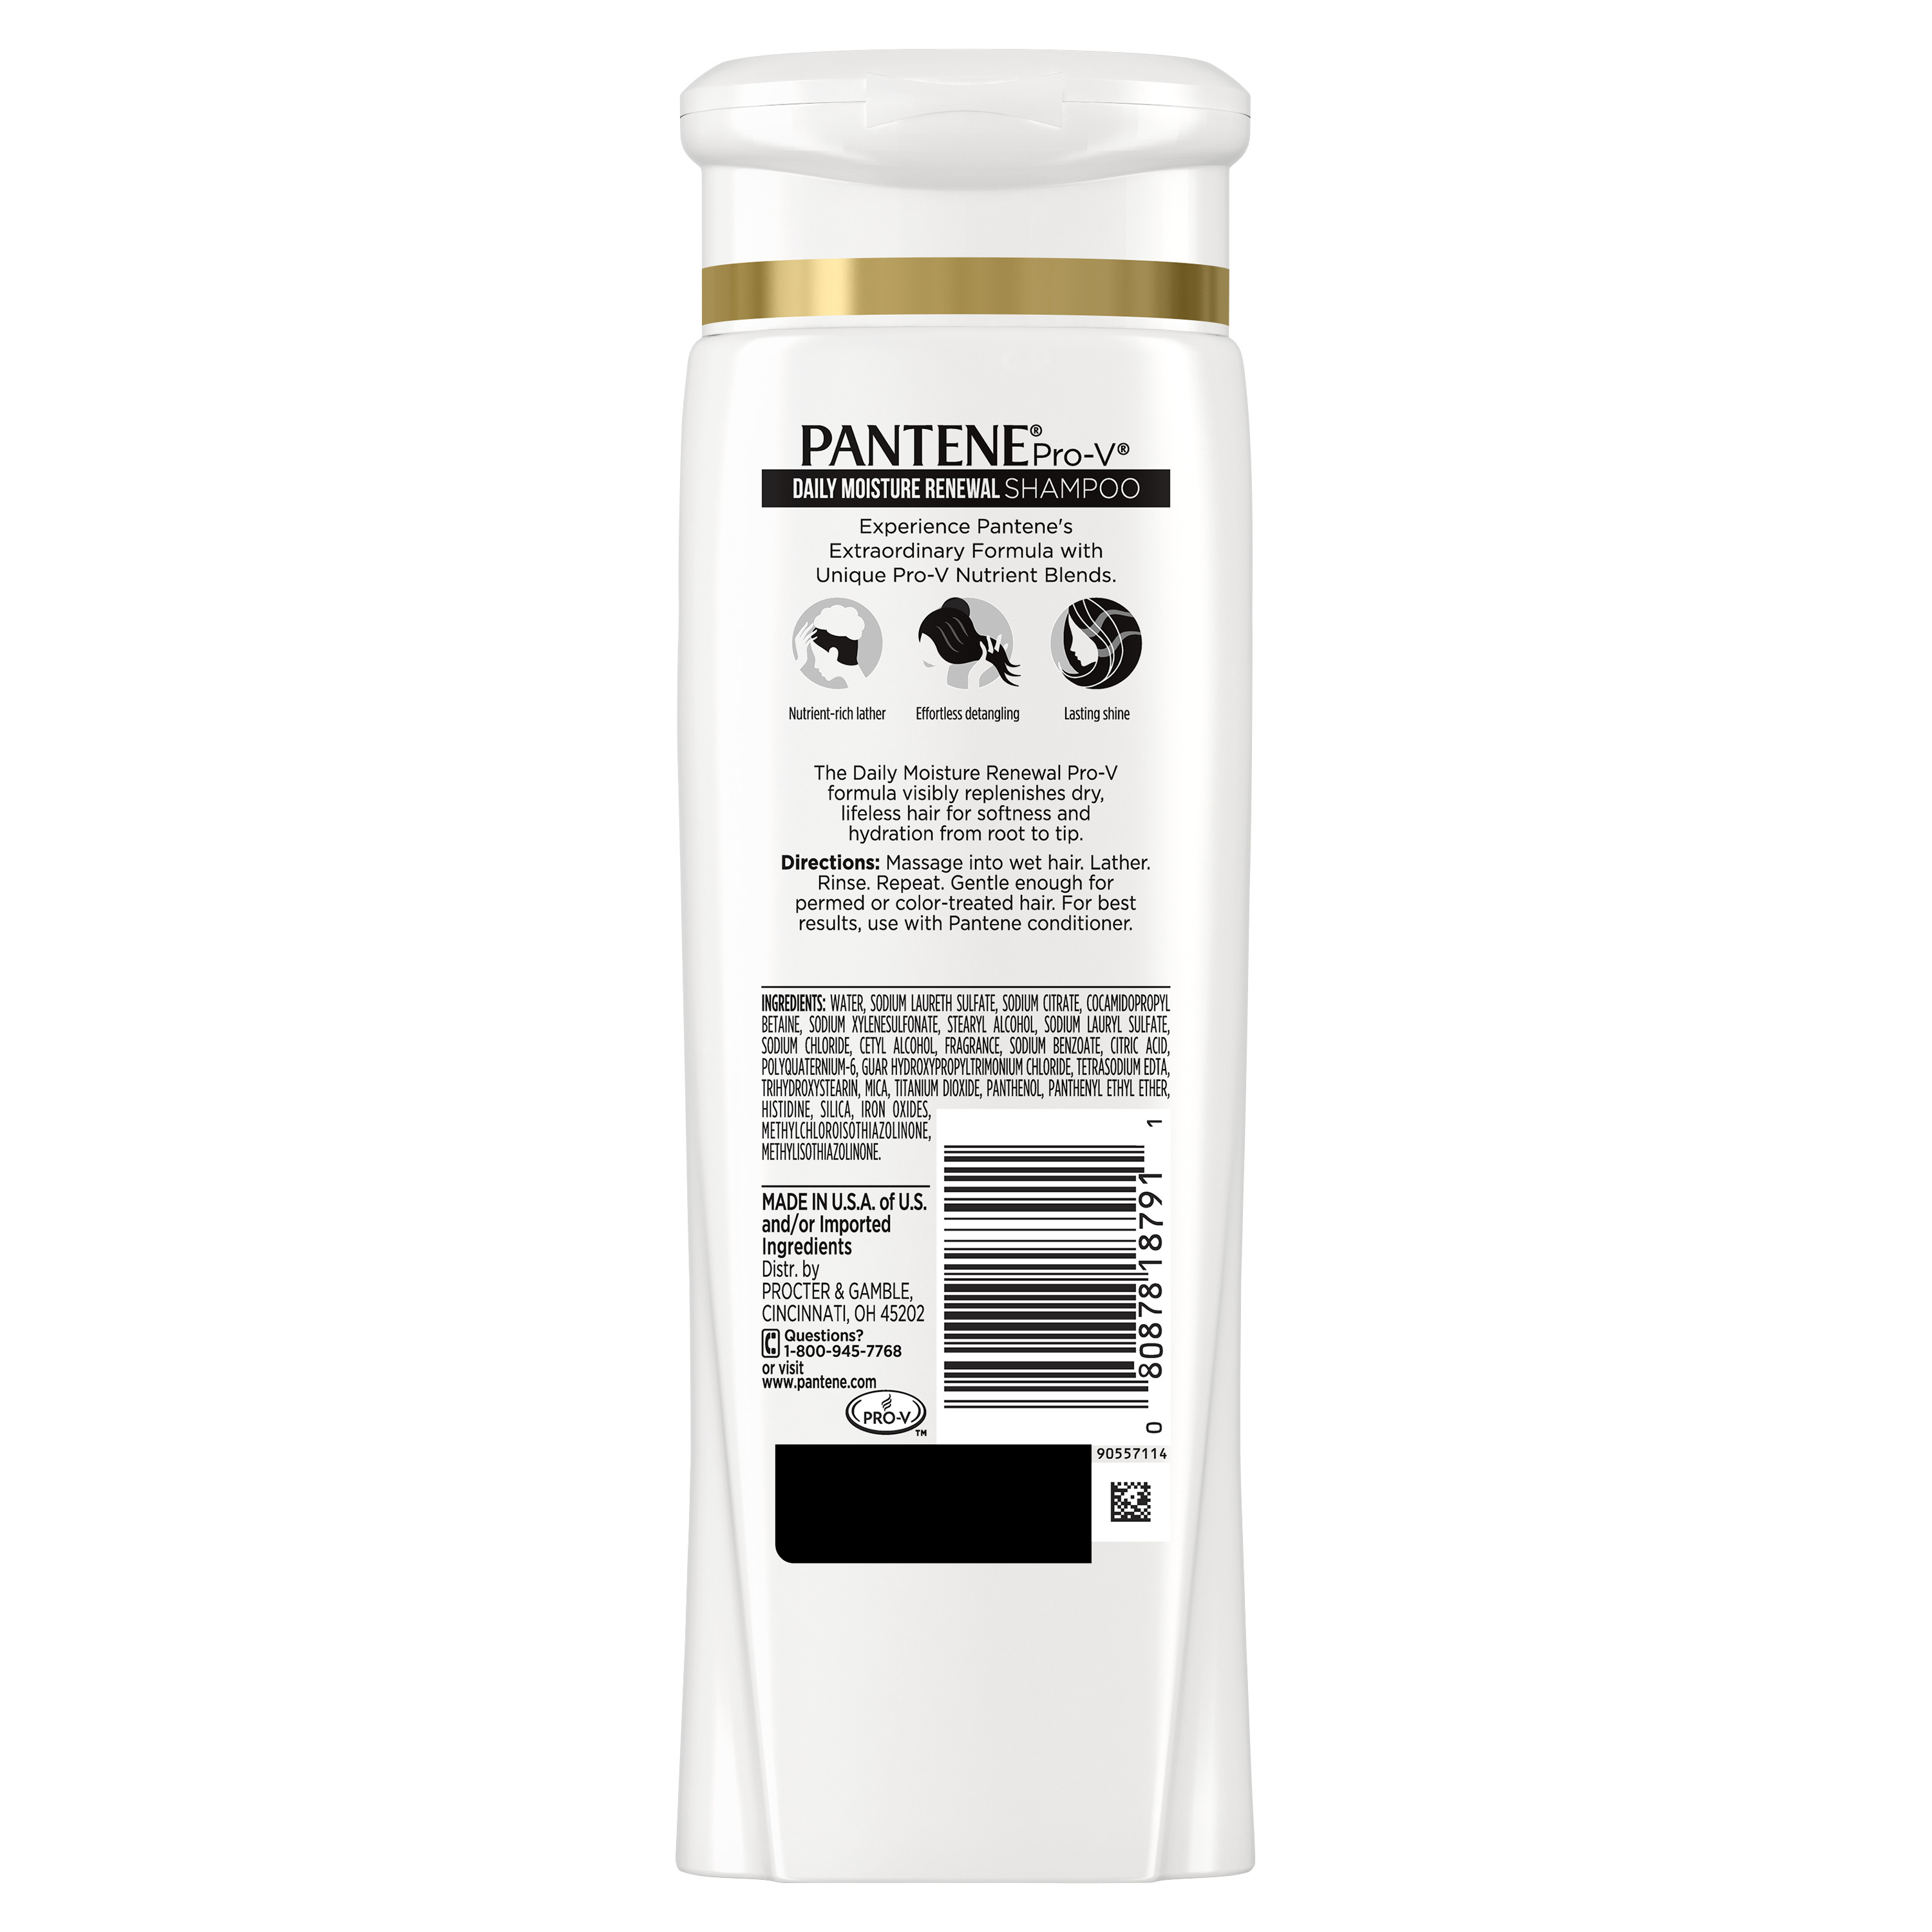 Pantene Pro-V Daily Moisture Renewal Detangling Shampoo, 11 fl oz - image 2 of 6